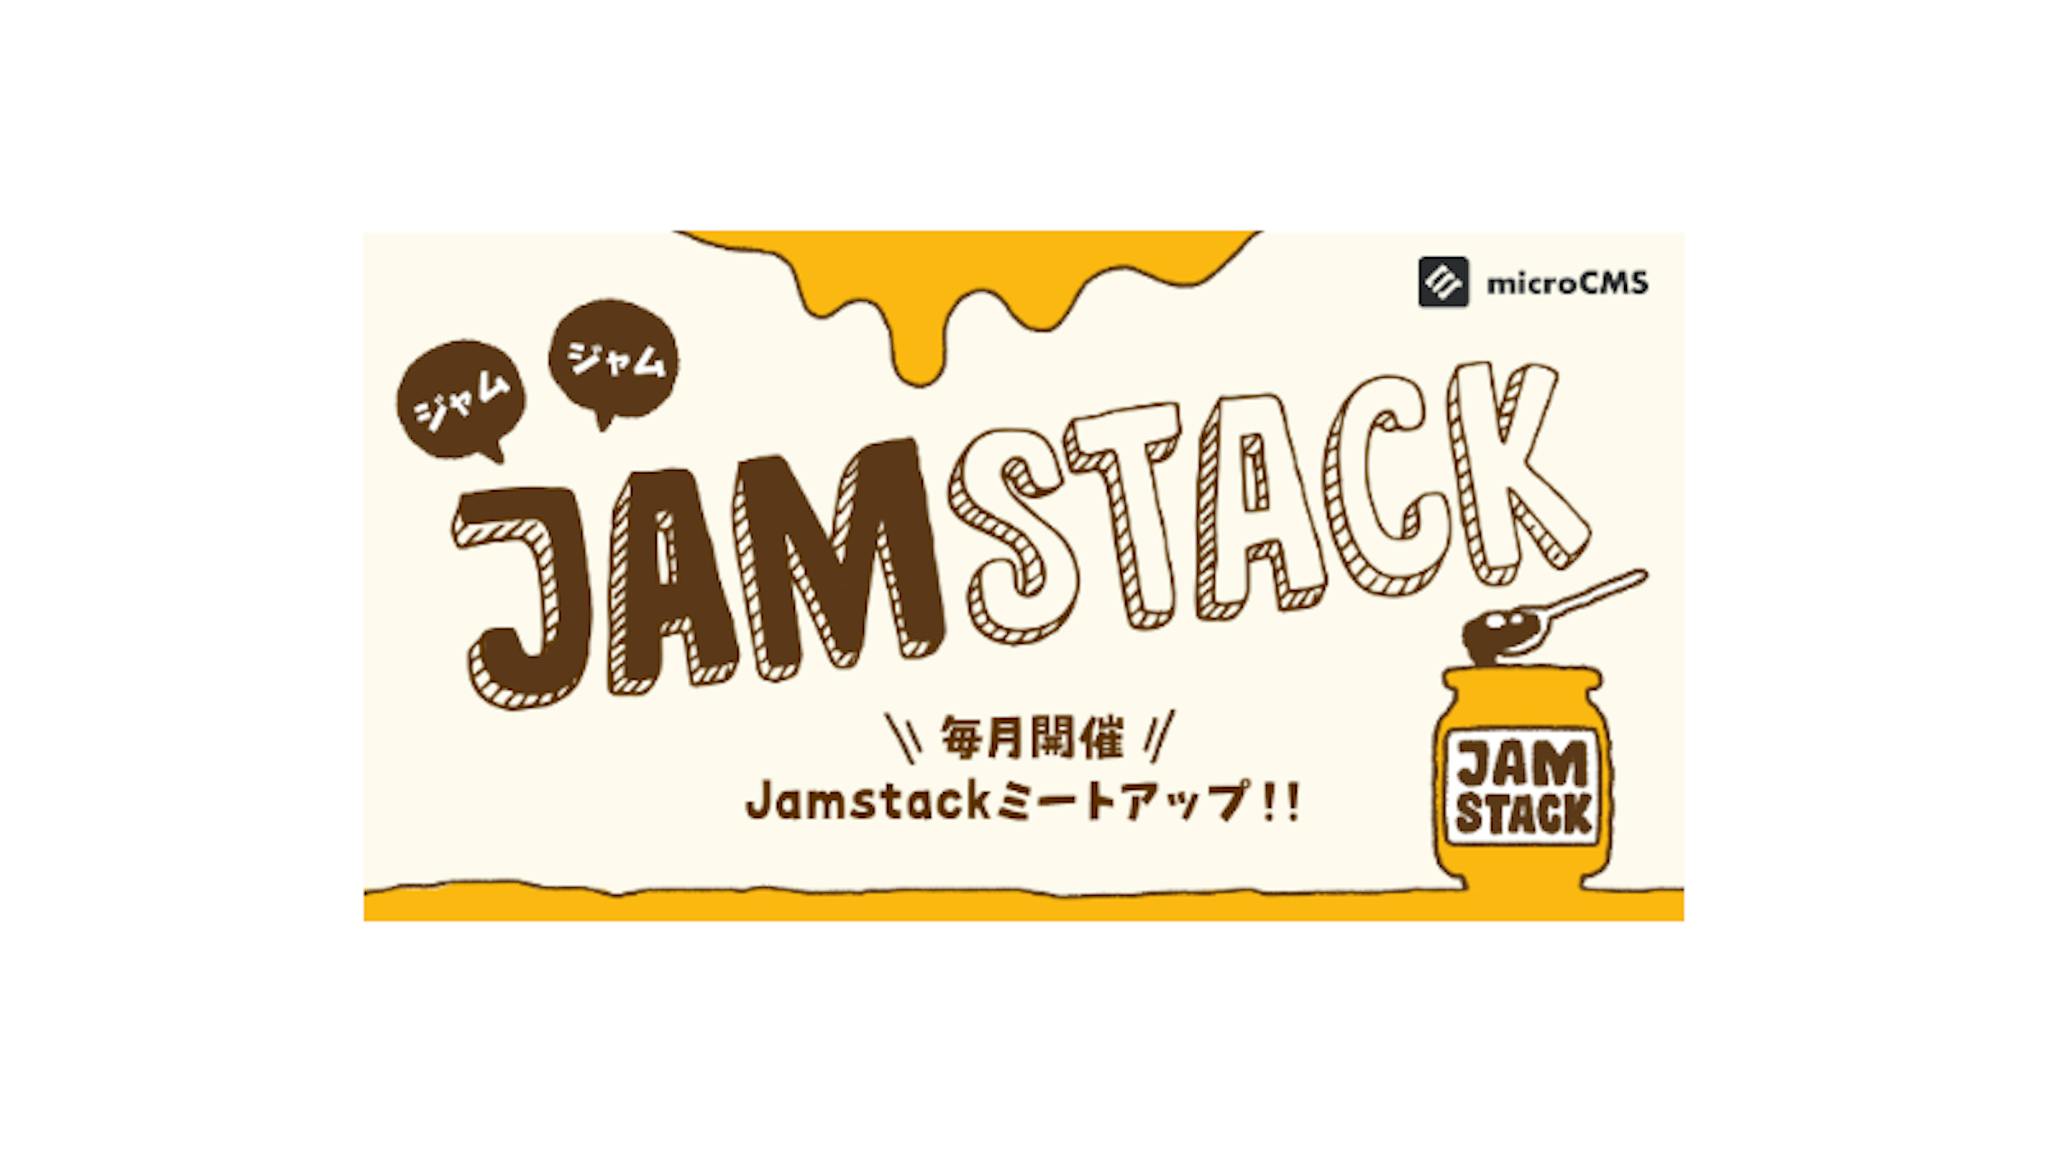 Jamstack勉強会「ジャムジャム!!Jamstack」に参加しました